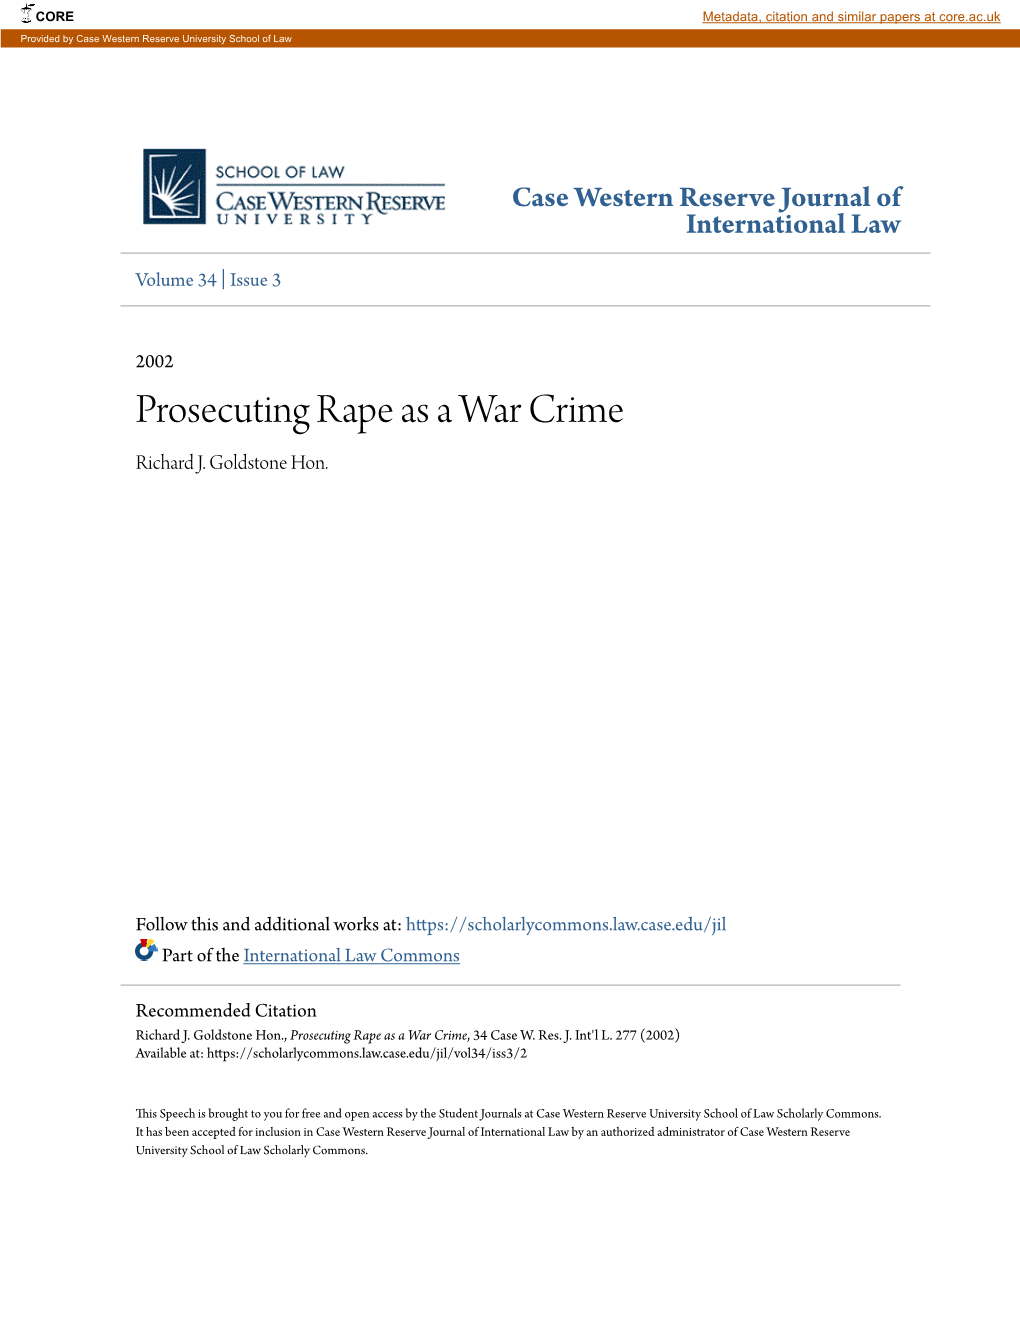 Prosecuting Rape As a War Crime Richard J